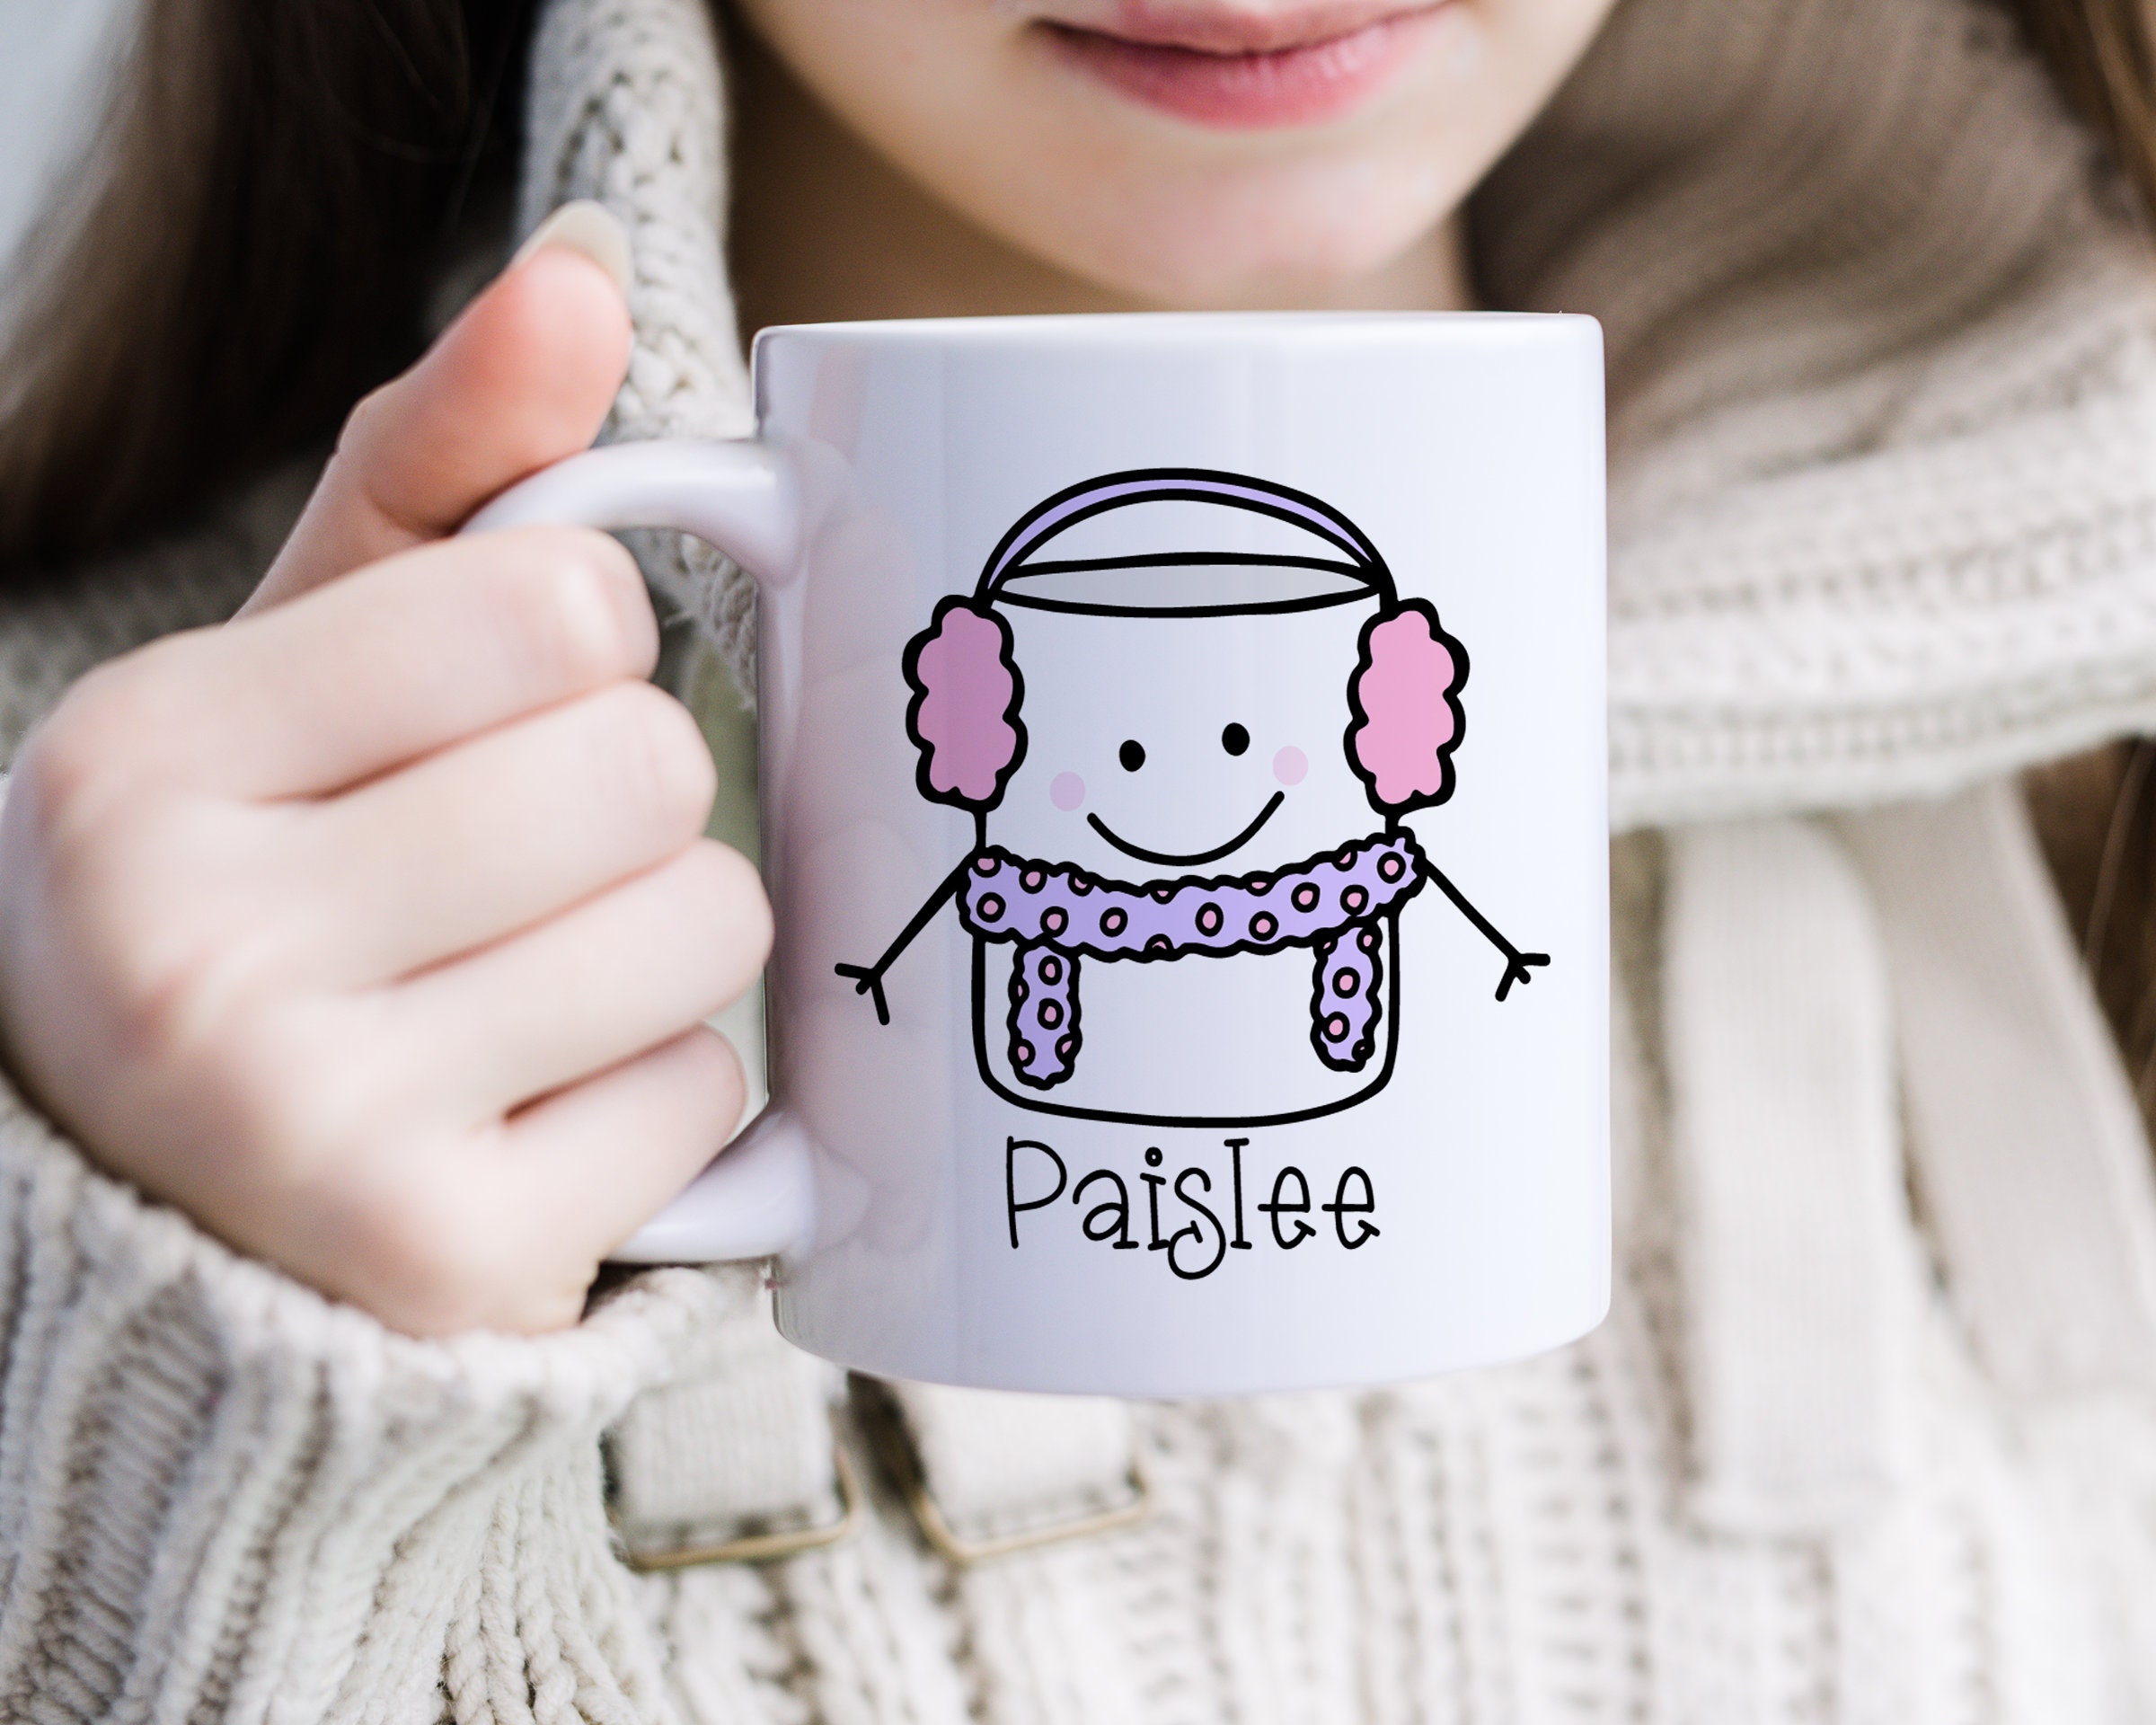 Personalised Easter mugs children's hot chocolate mugs